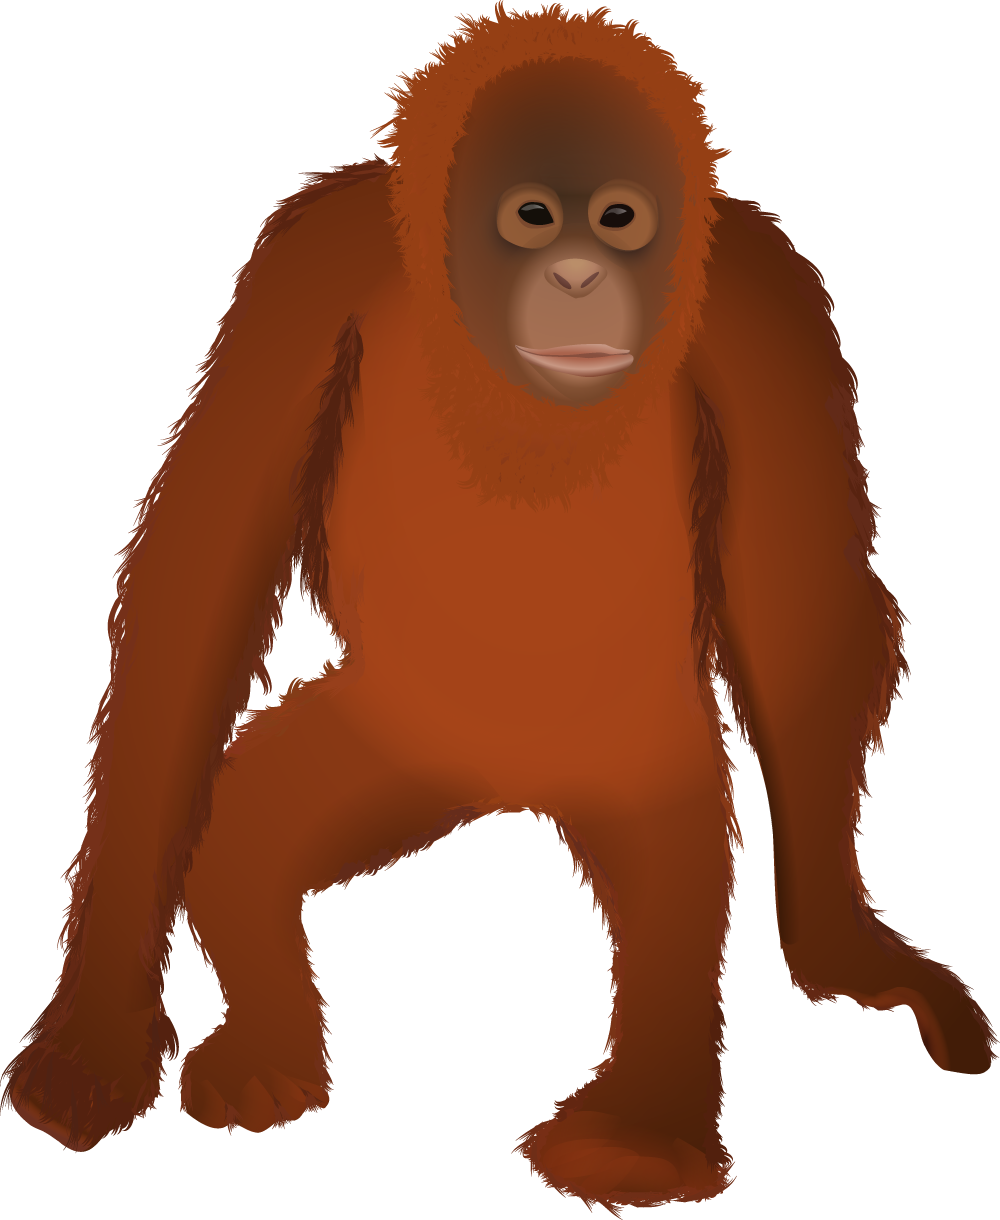 Orangutan Illustration